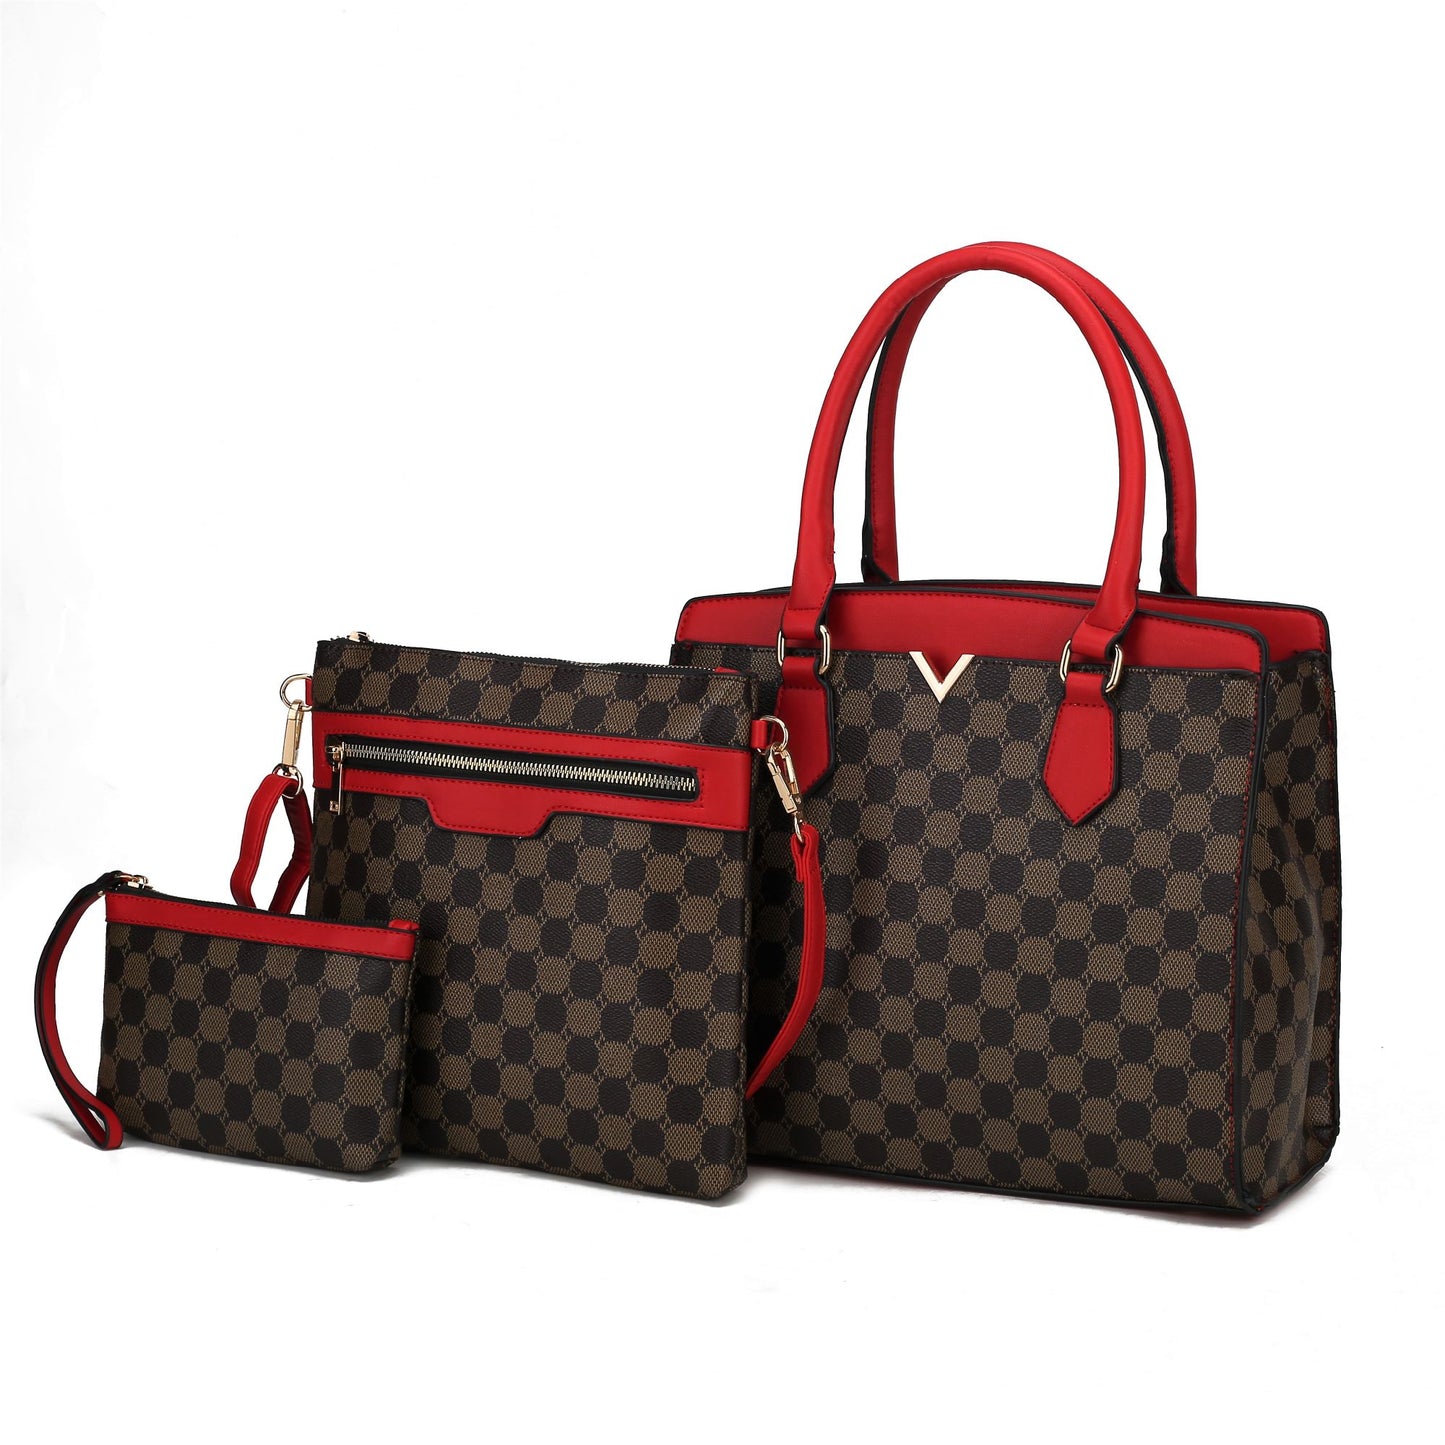 MKF Collection Finnley 3 Pc Satchel Handbag with Crossbody & Wristlet Vegan Leather Womens by Mia k